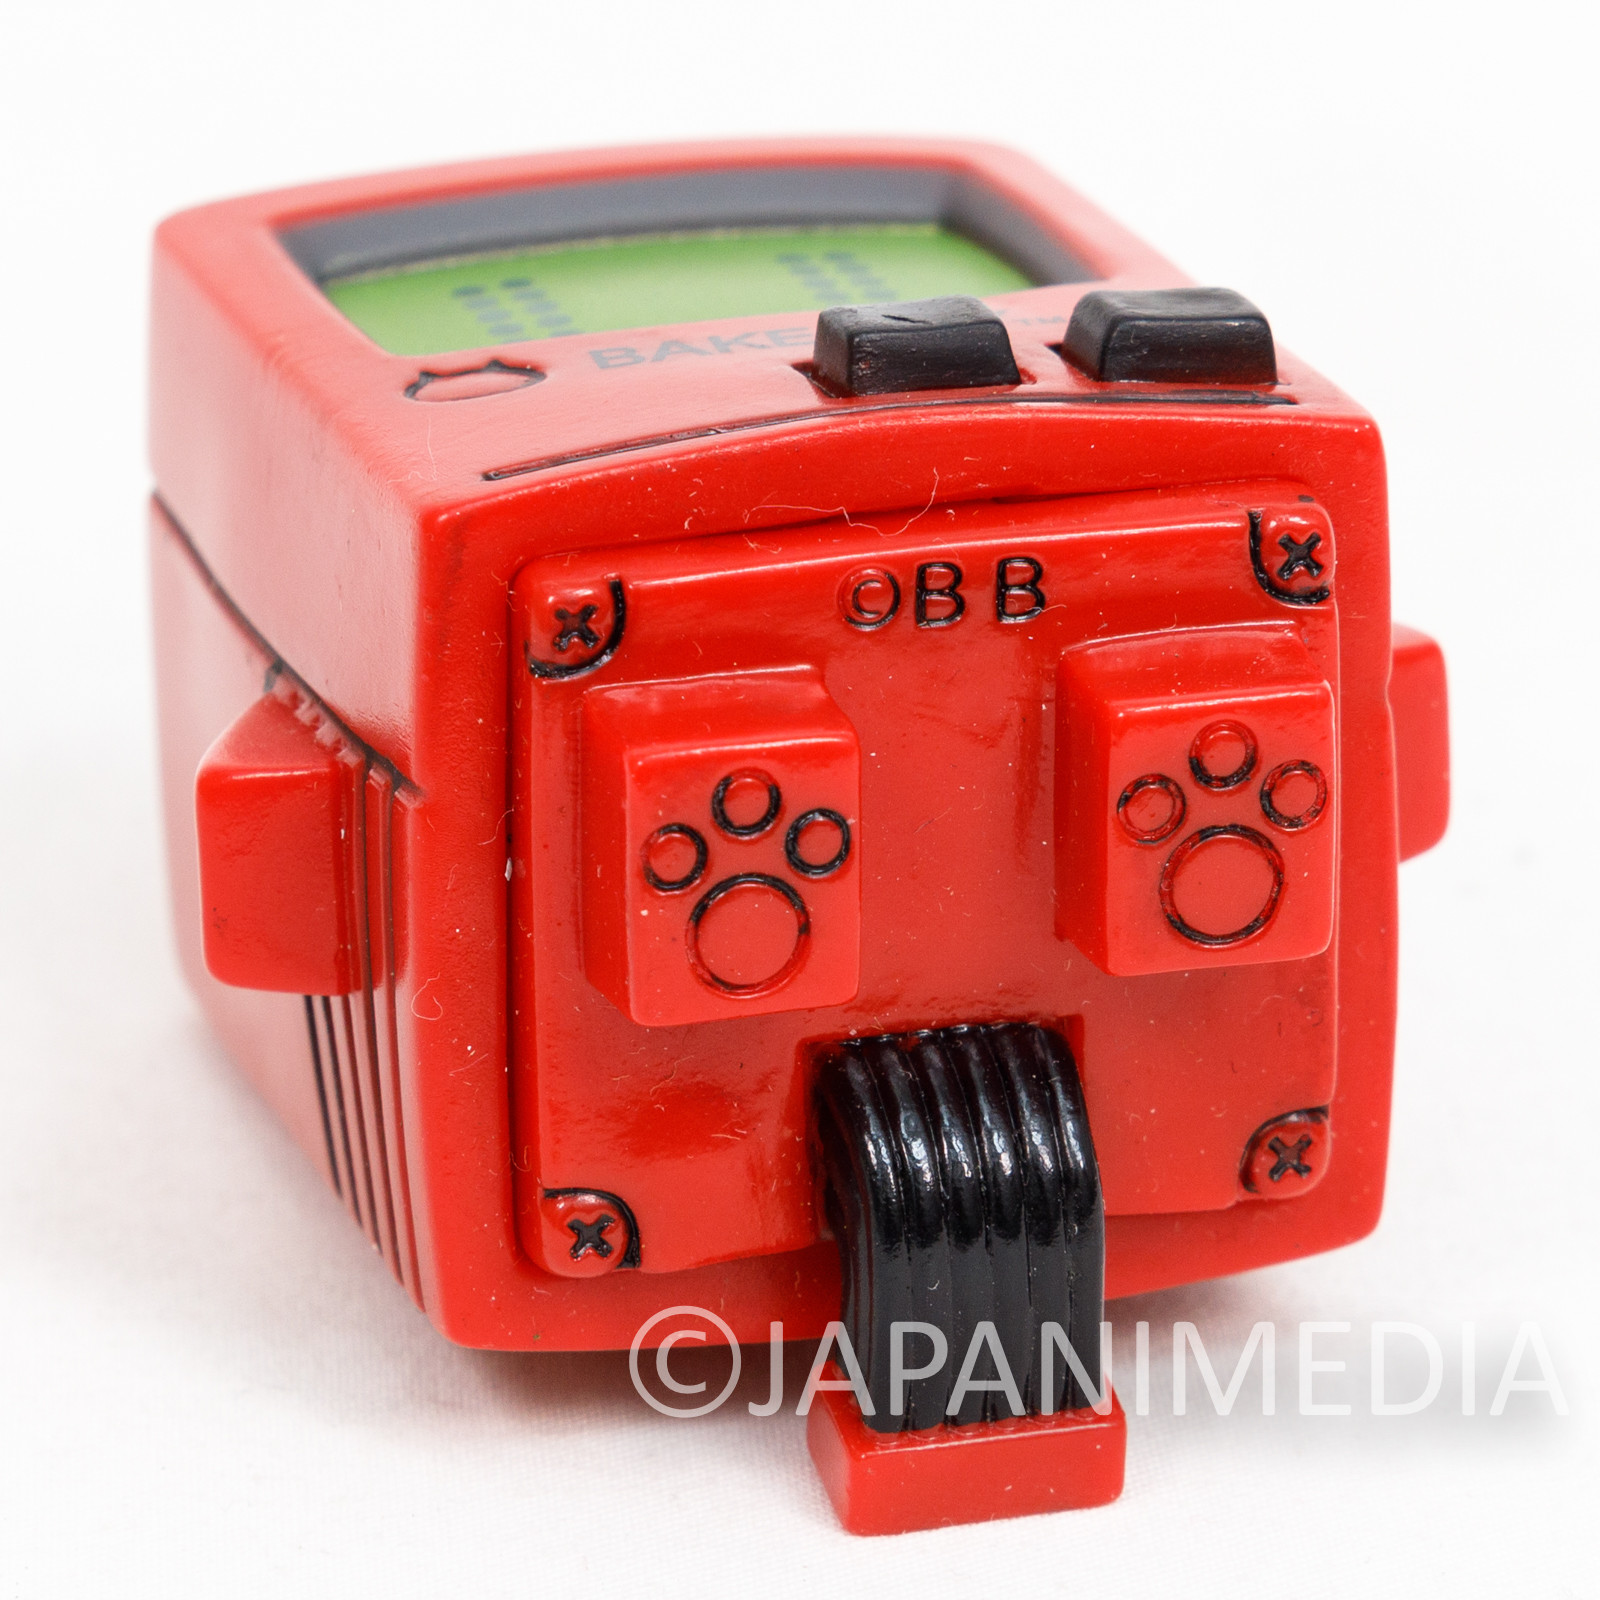 BAKETAN Bake Boy Red ver. Soft Vinyl Figure Medicom Toy VAG Series JAPAN